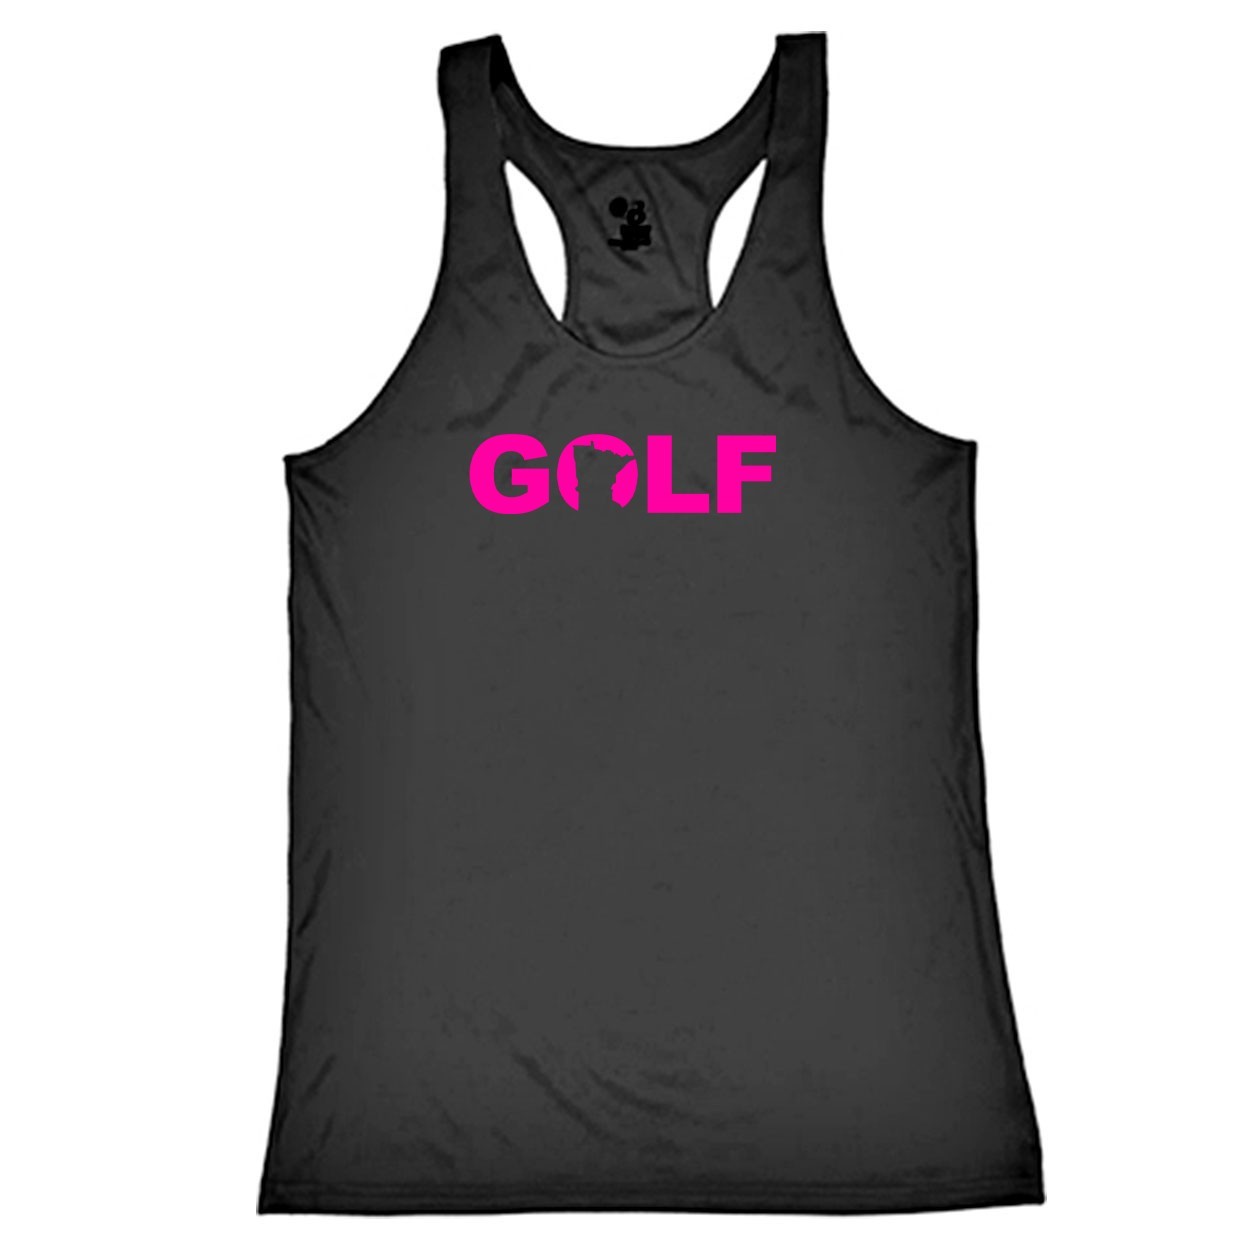 Golf Minnesota Classic Youth Girls Performance Racerback Tank Top Black (Pink Logo)